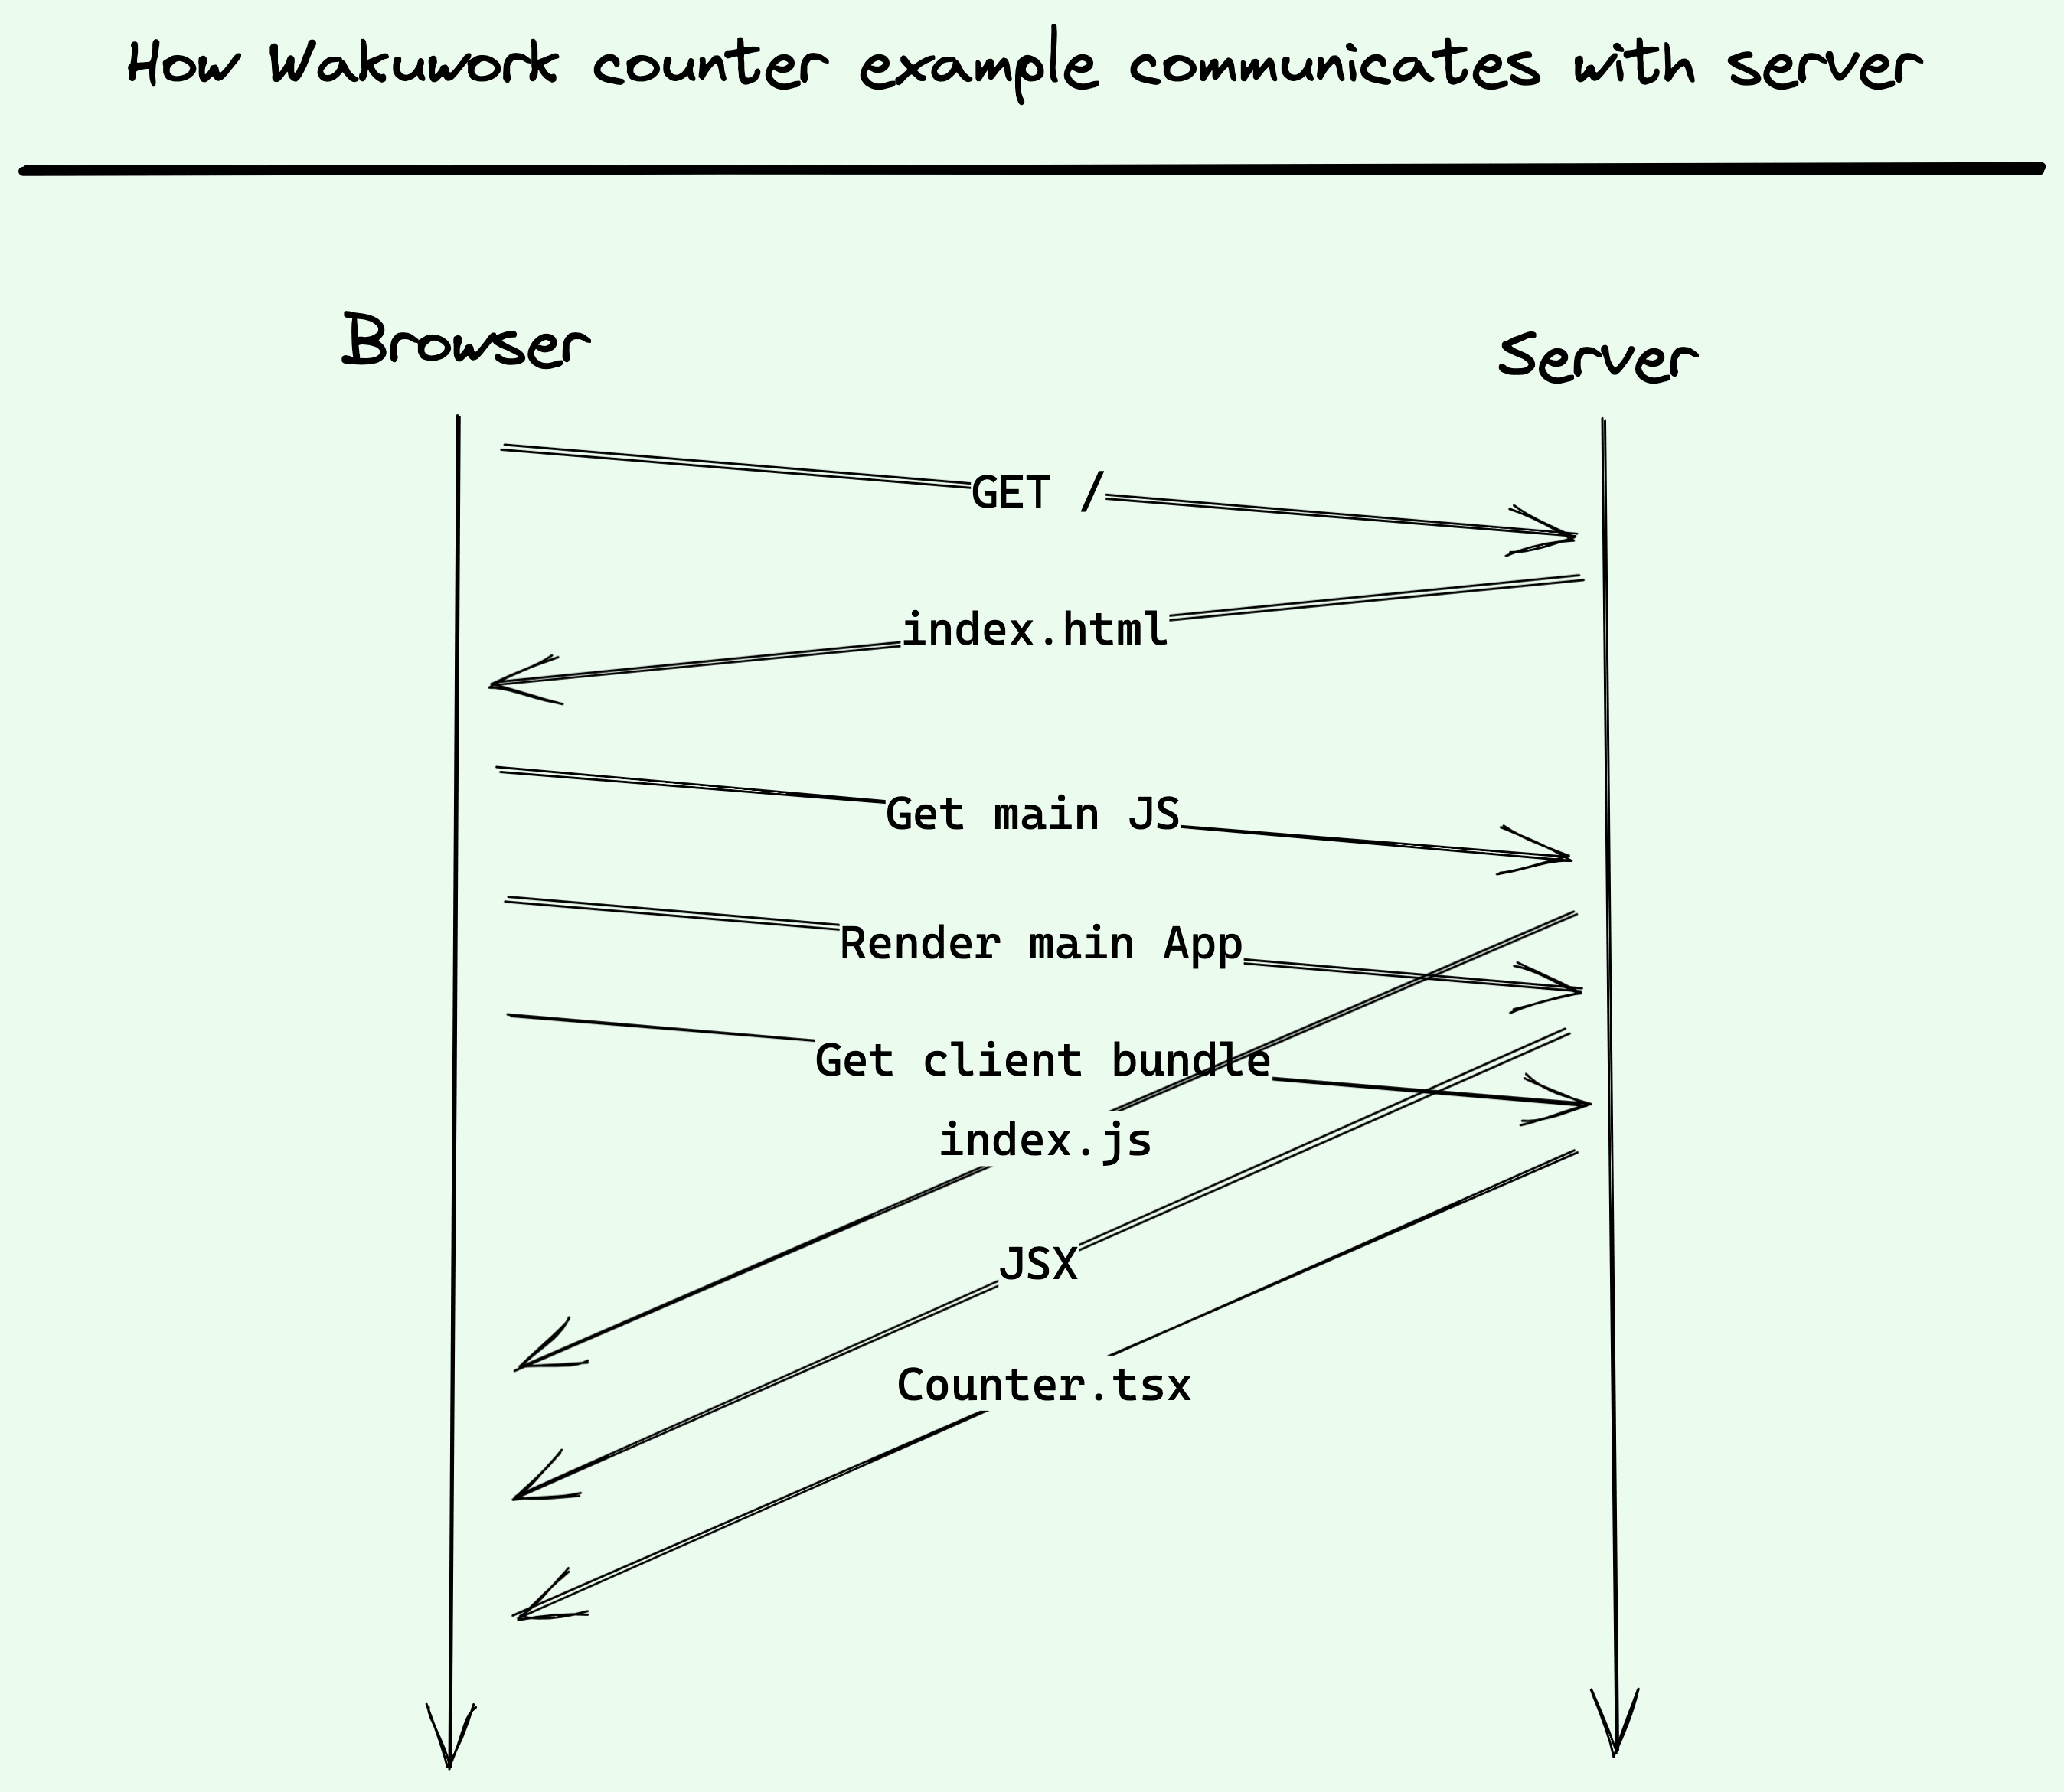 wakuwork-counter